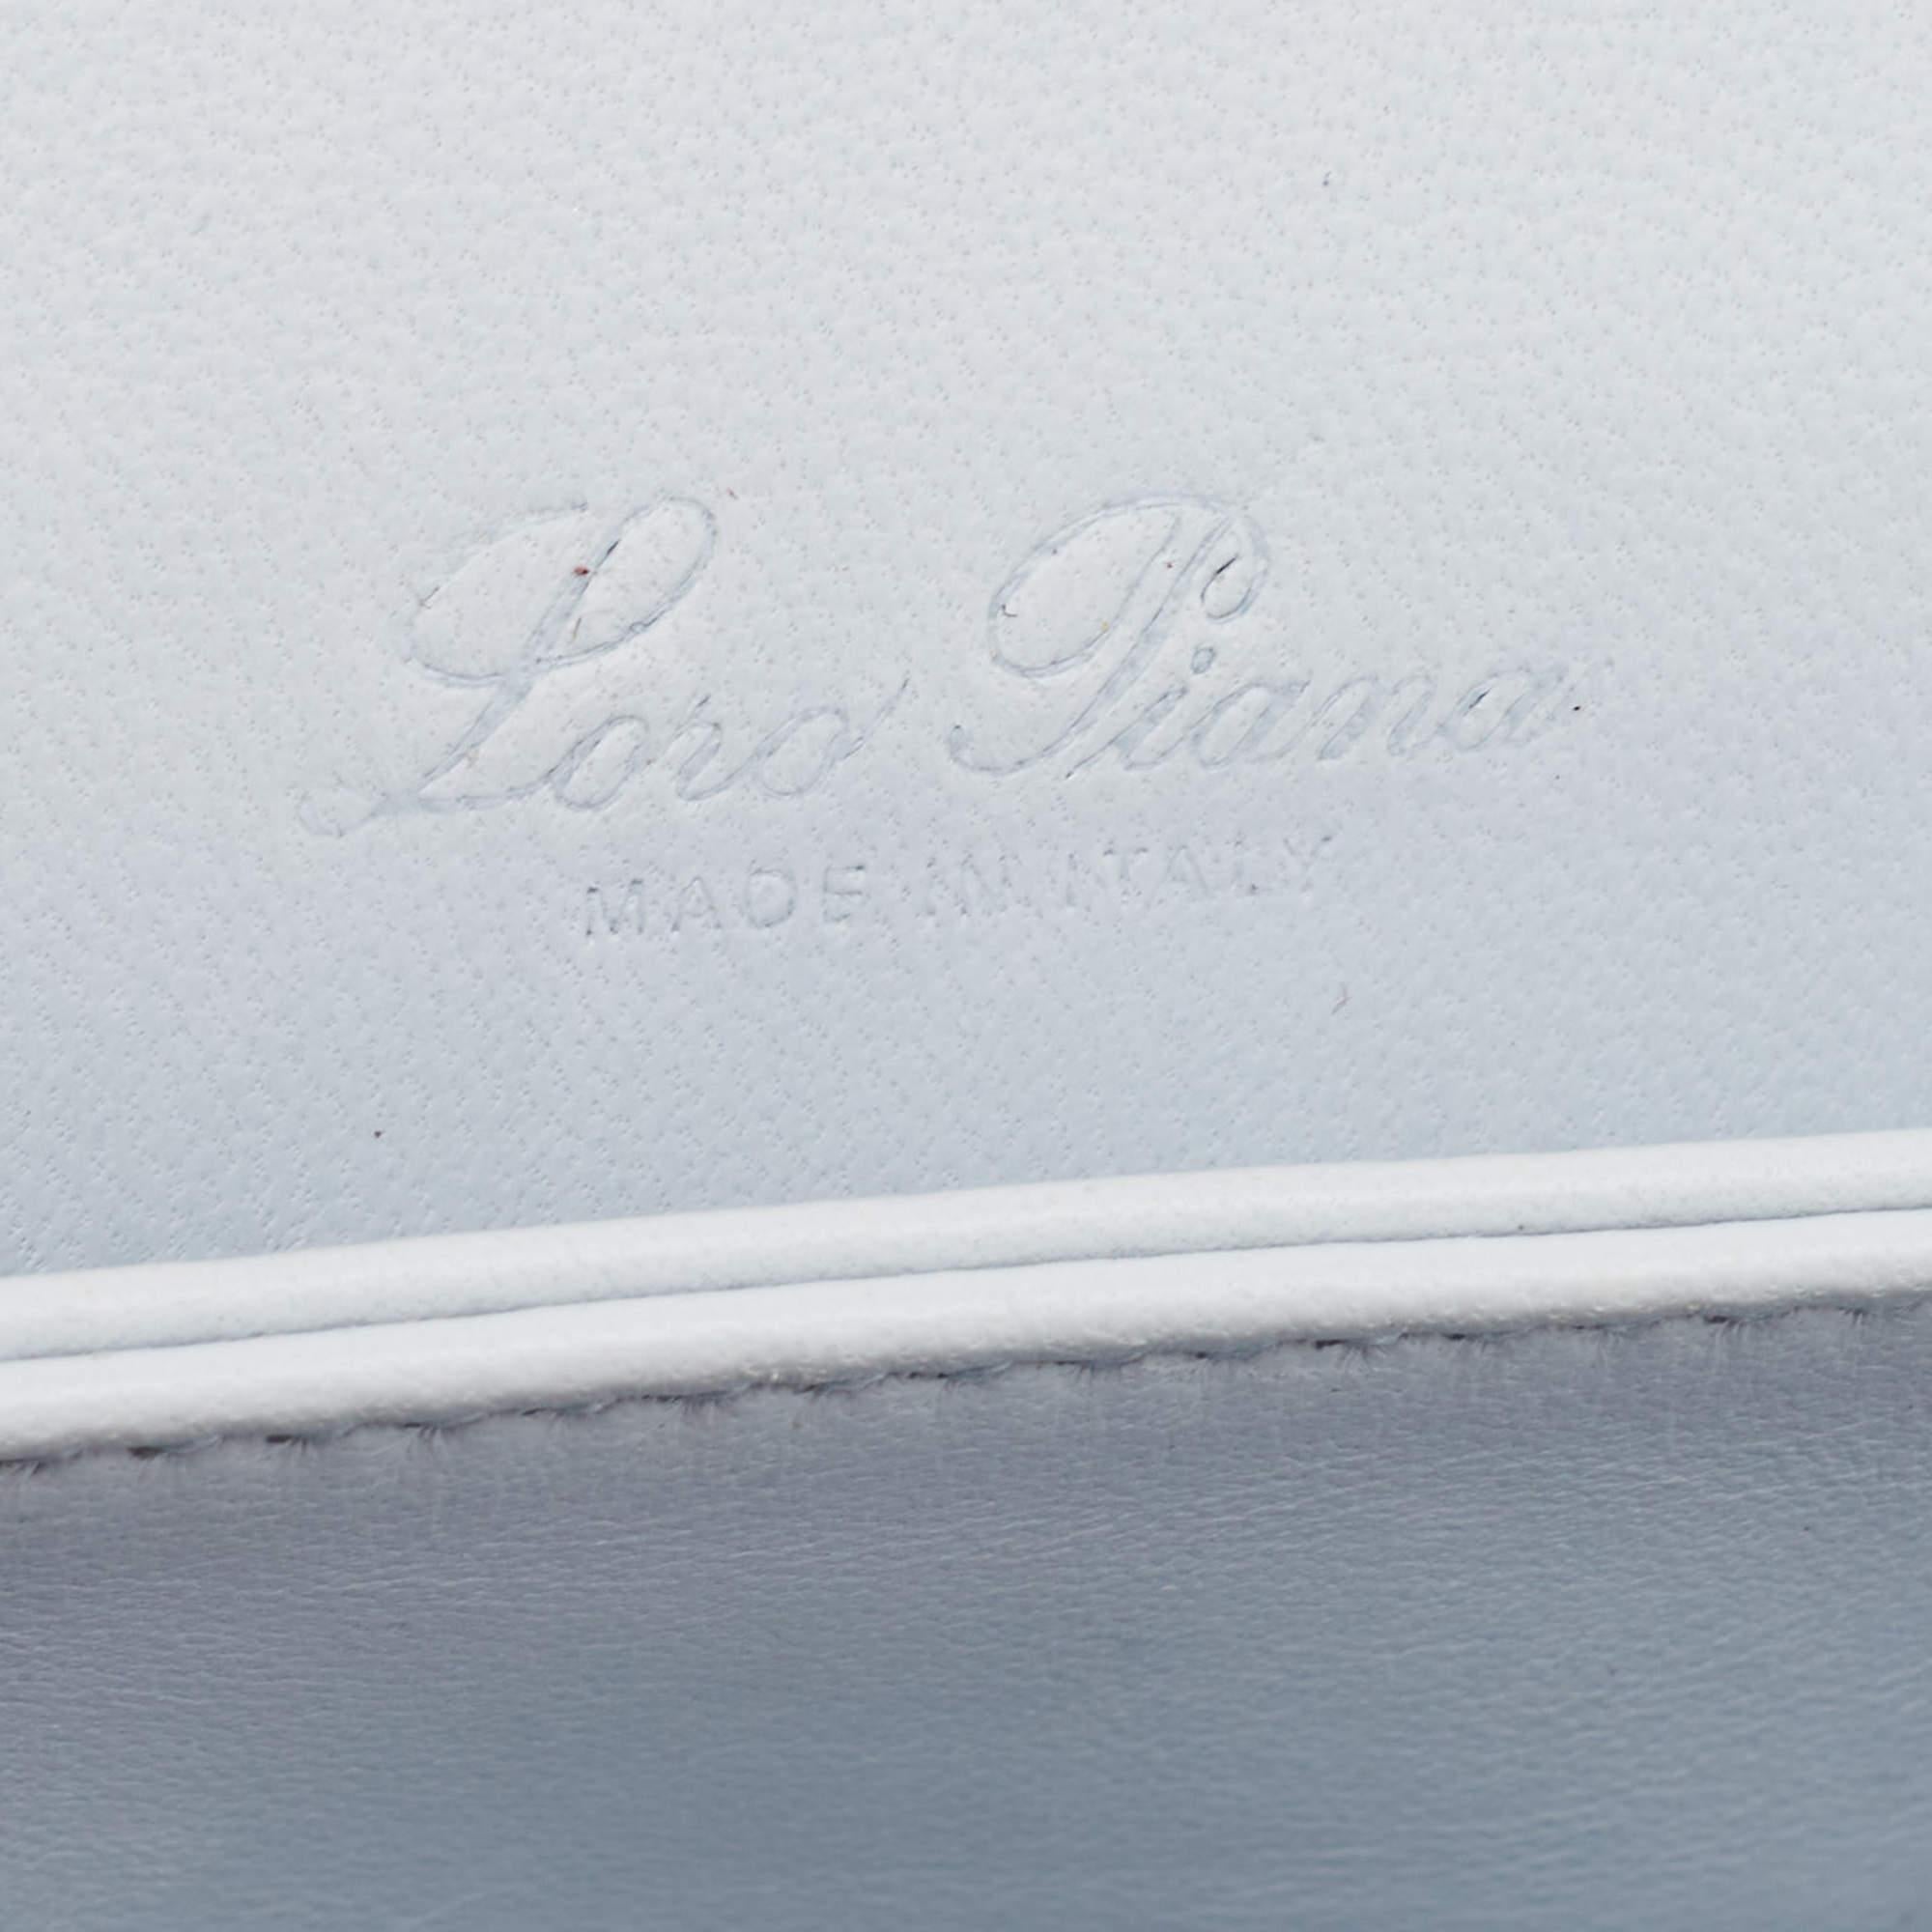 Loro Piana Pale Blue Leather Lock-In Shoulder Bag 6